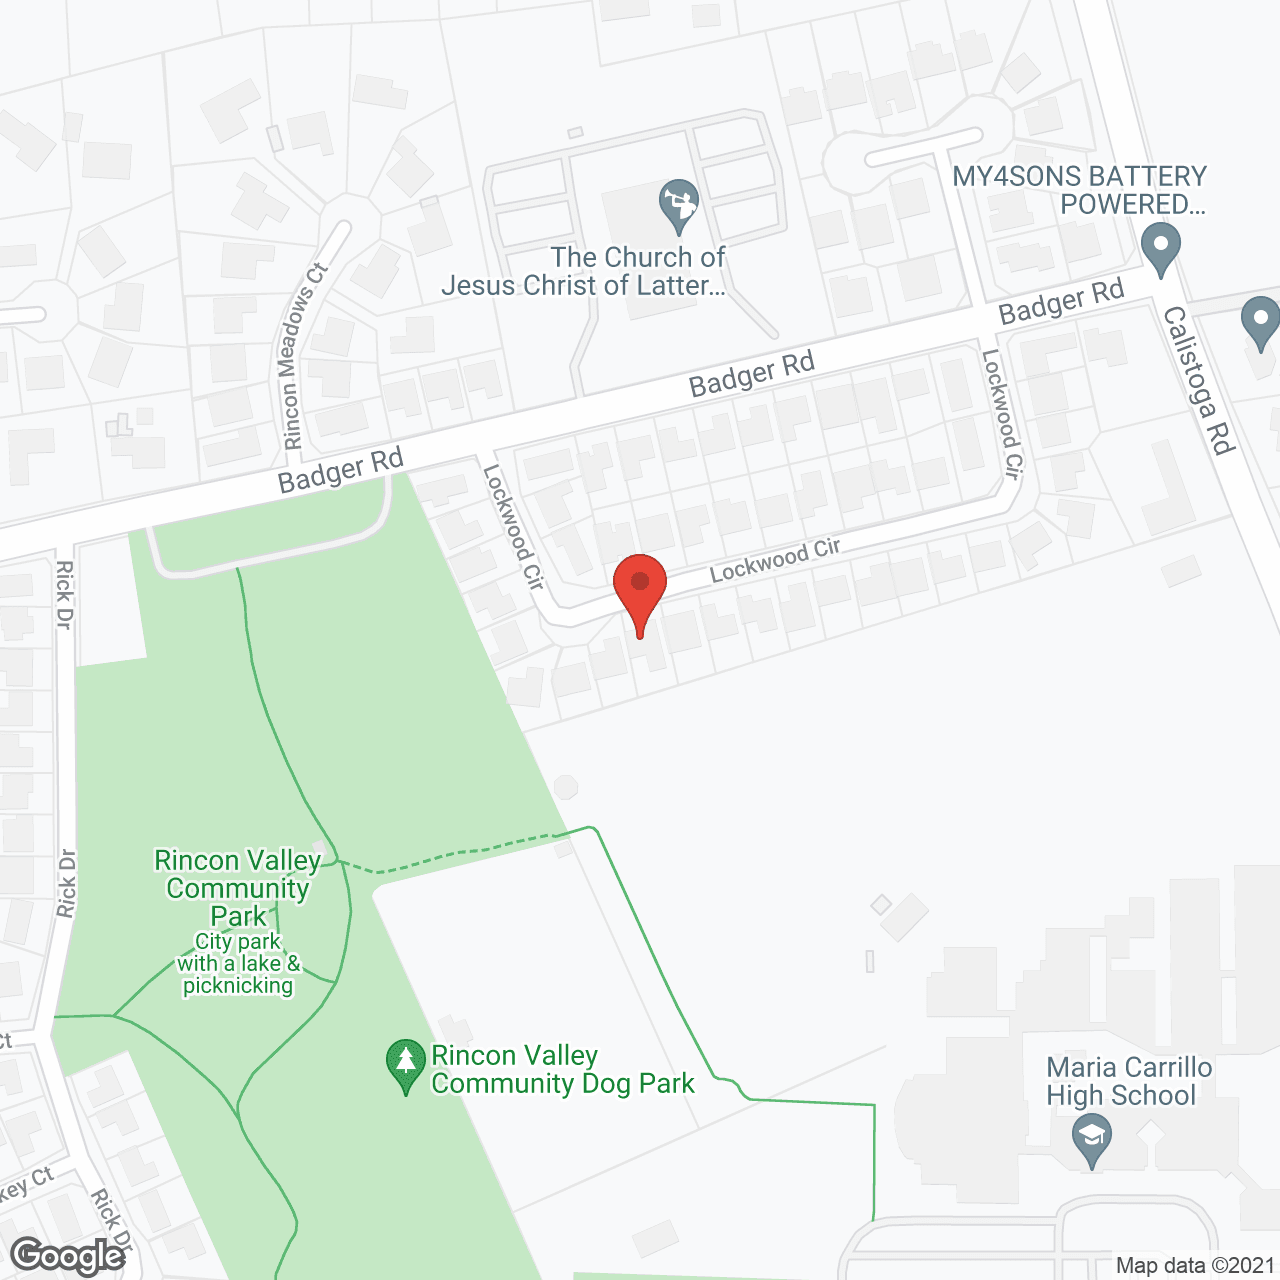 Rincon Valley Gardens 1 in google map